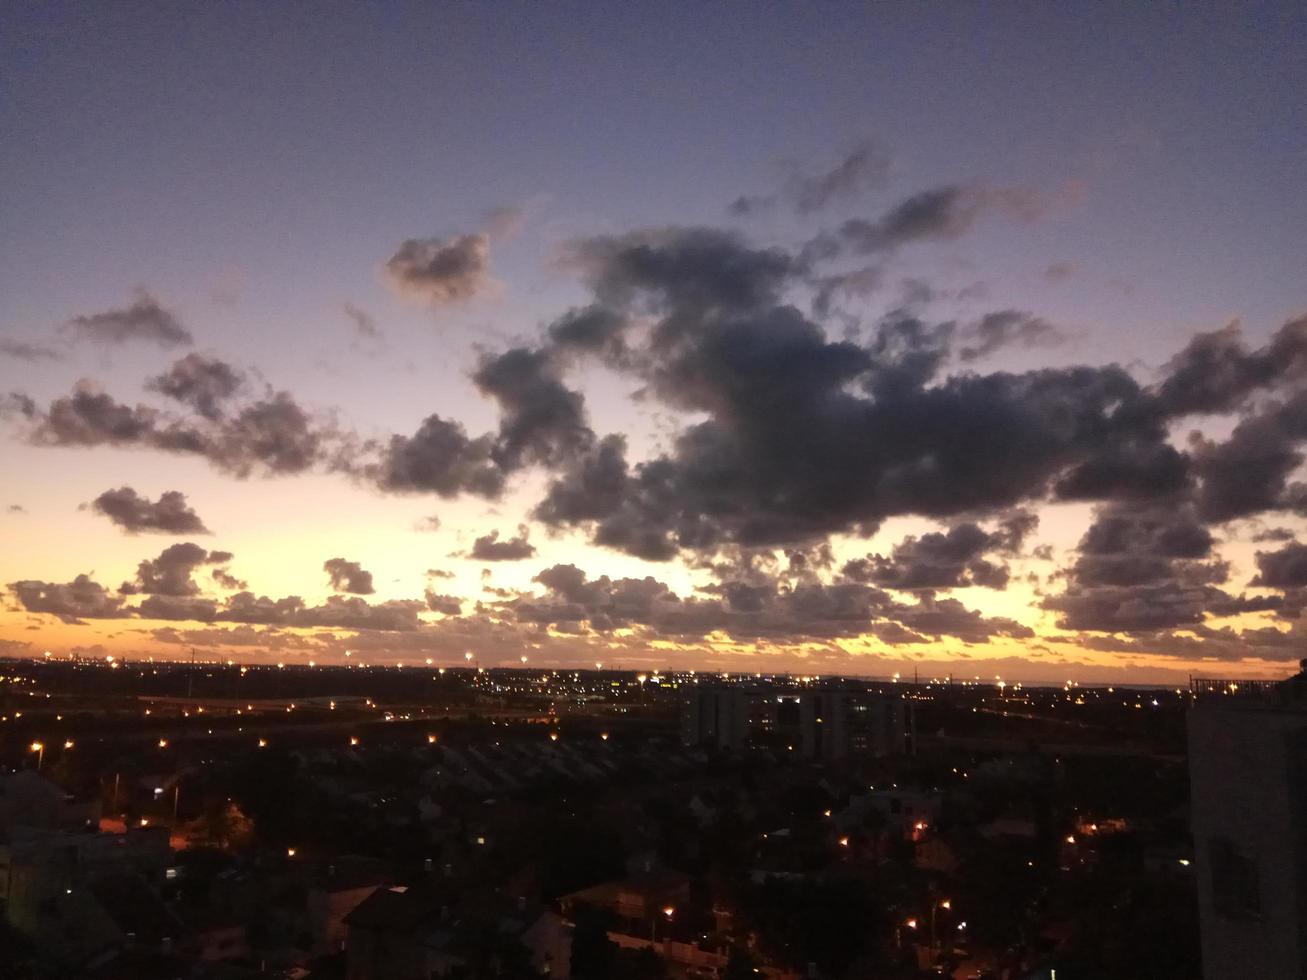 tramonto incredibile in Israele vedute della terra santa foto